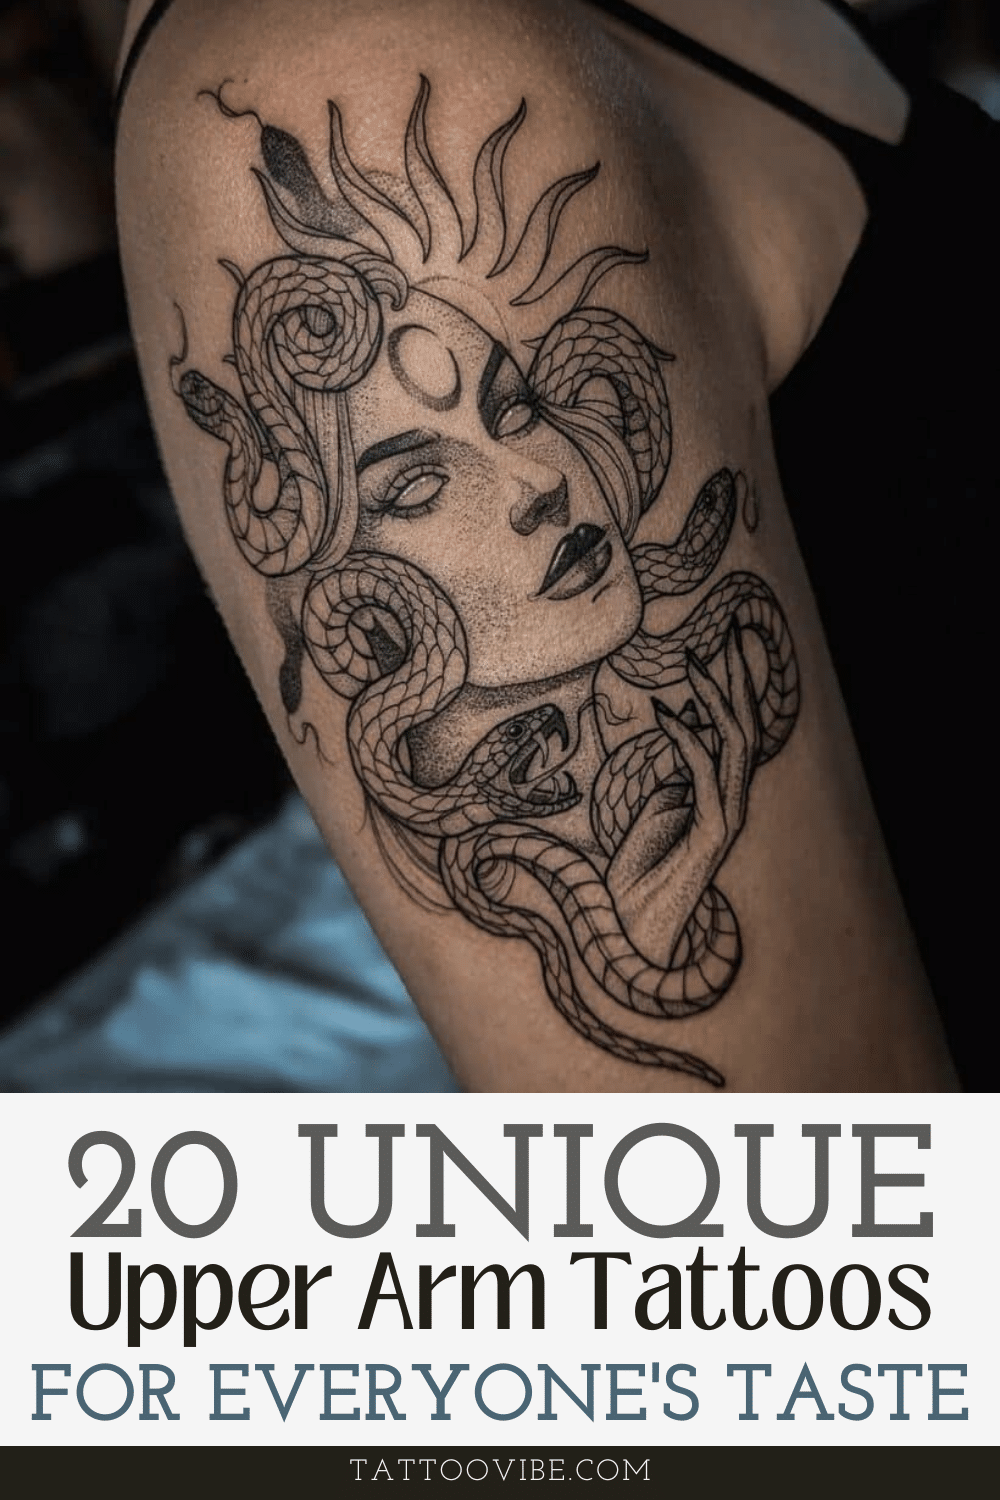 20 Unique Upper Arm Tattoos for Everyone's Taste